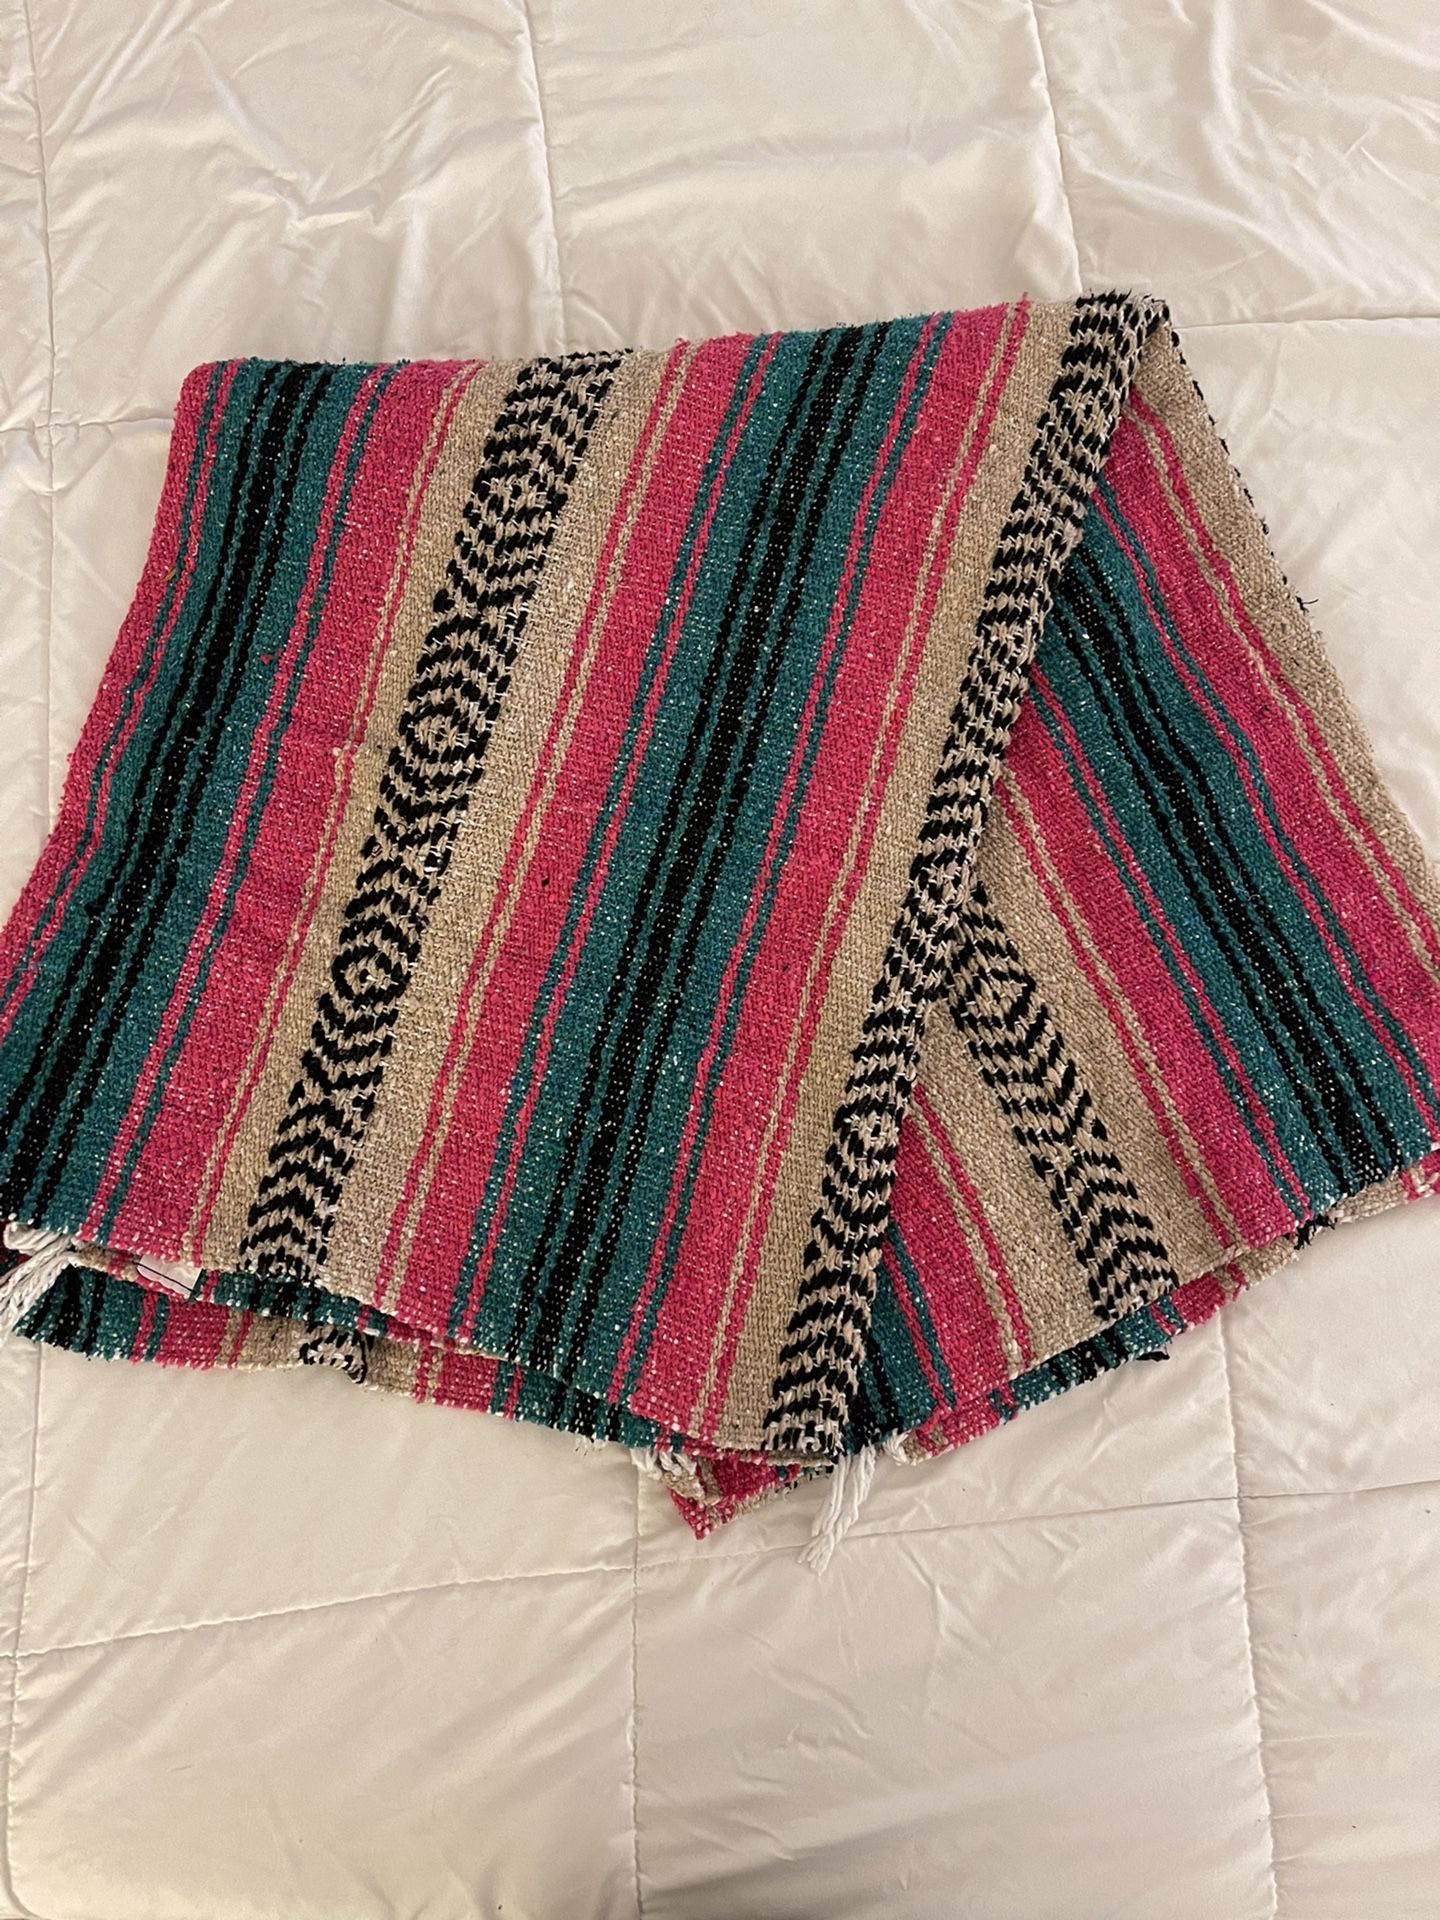 Mexican Yoga Blanket